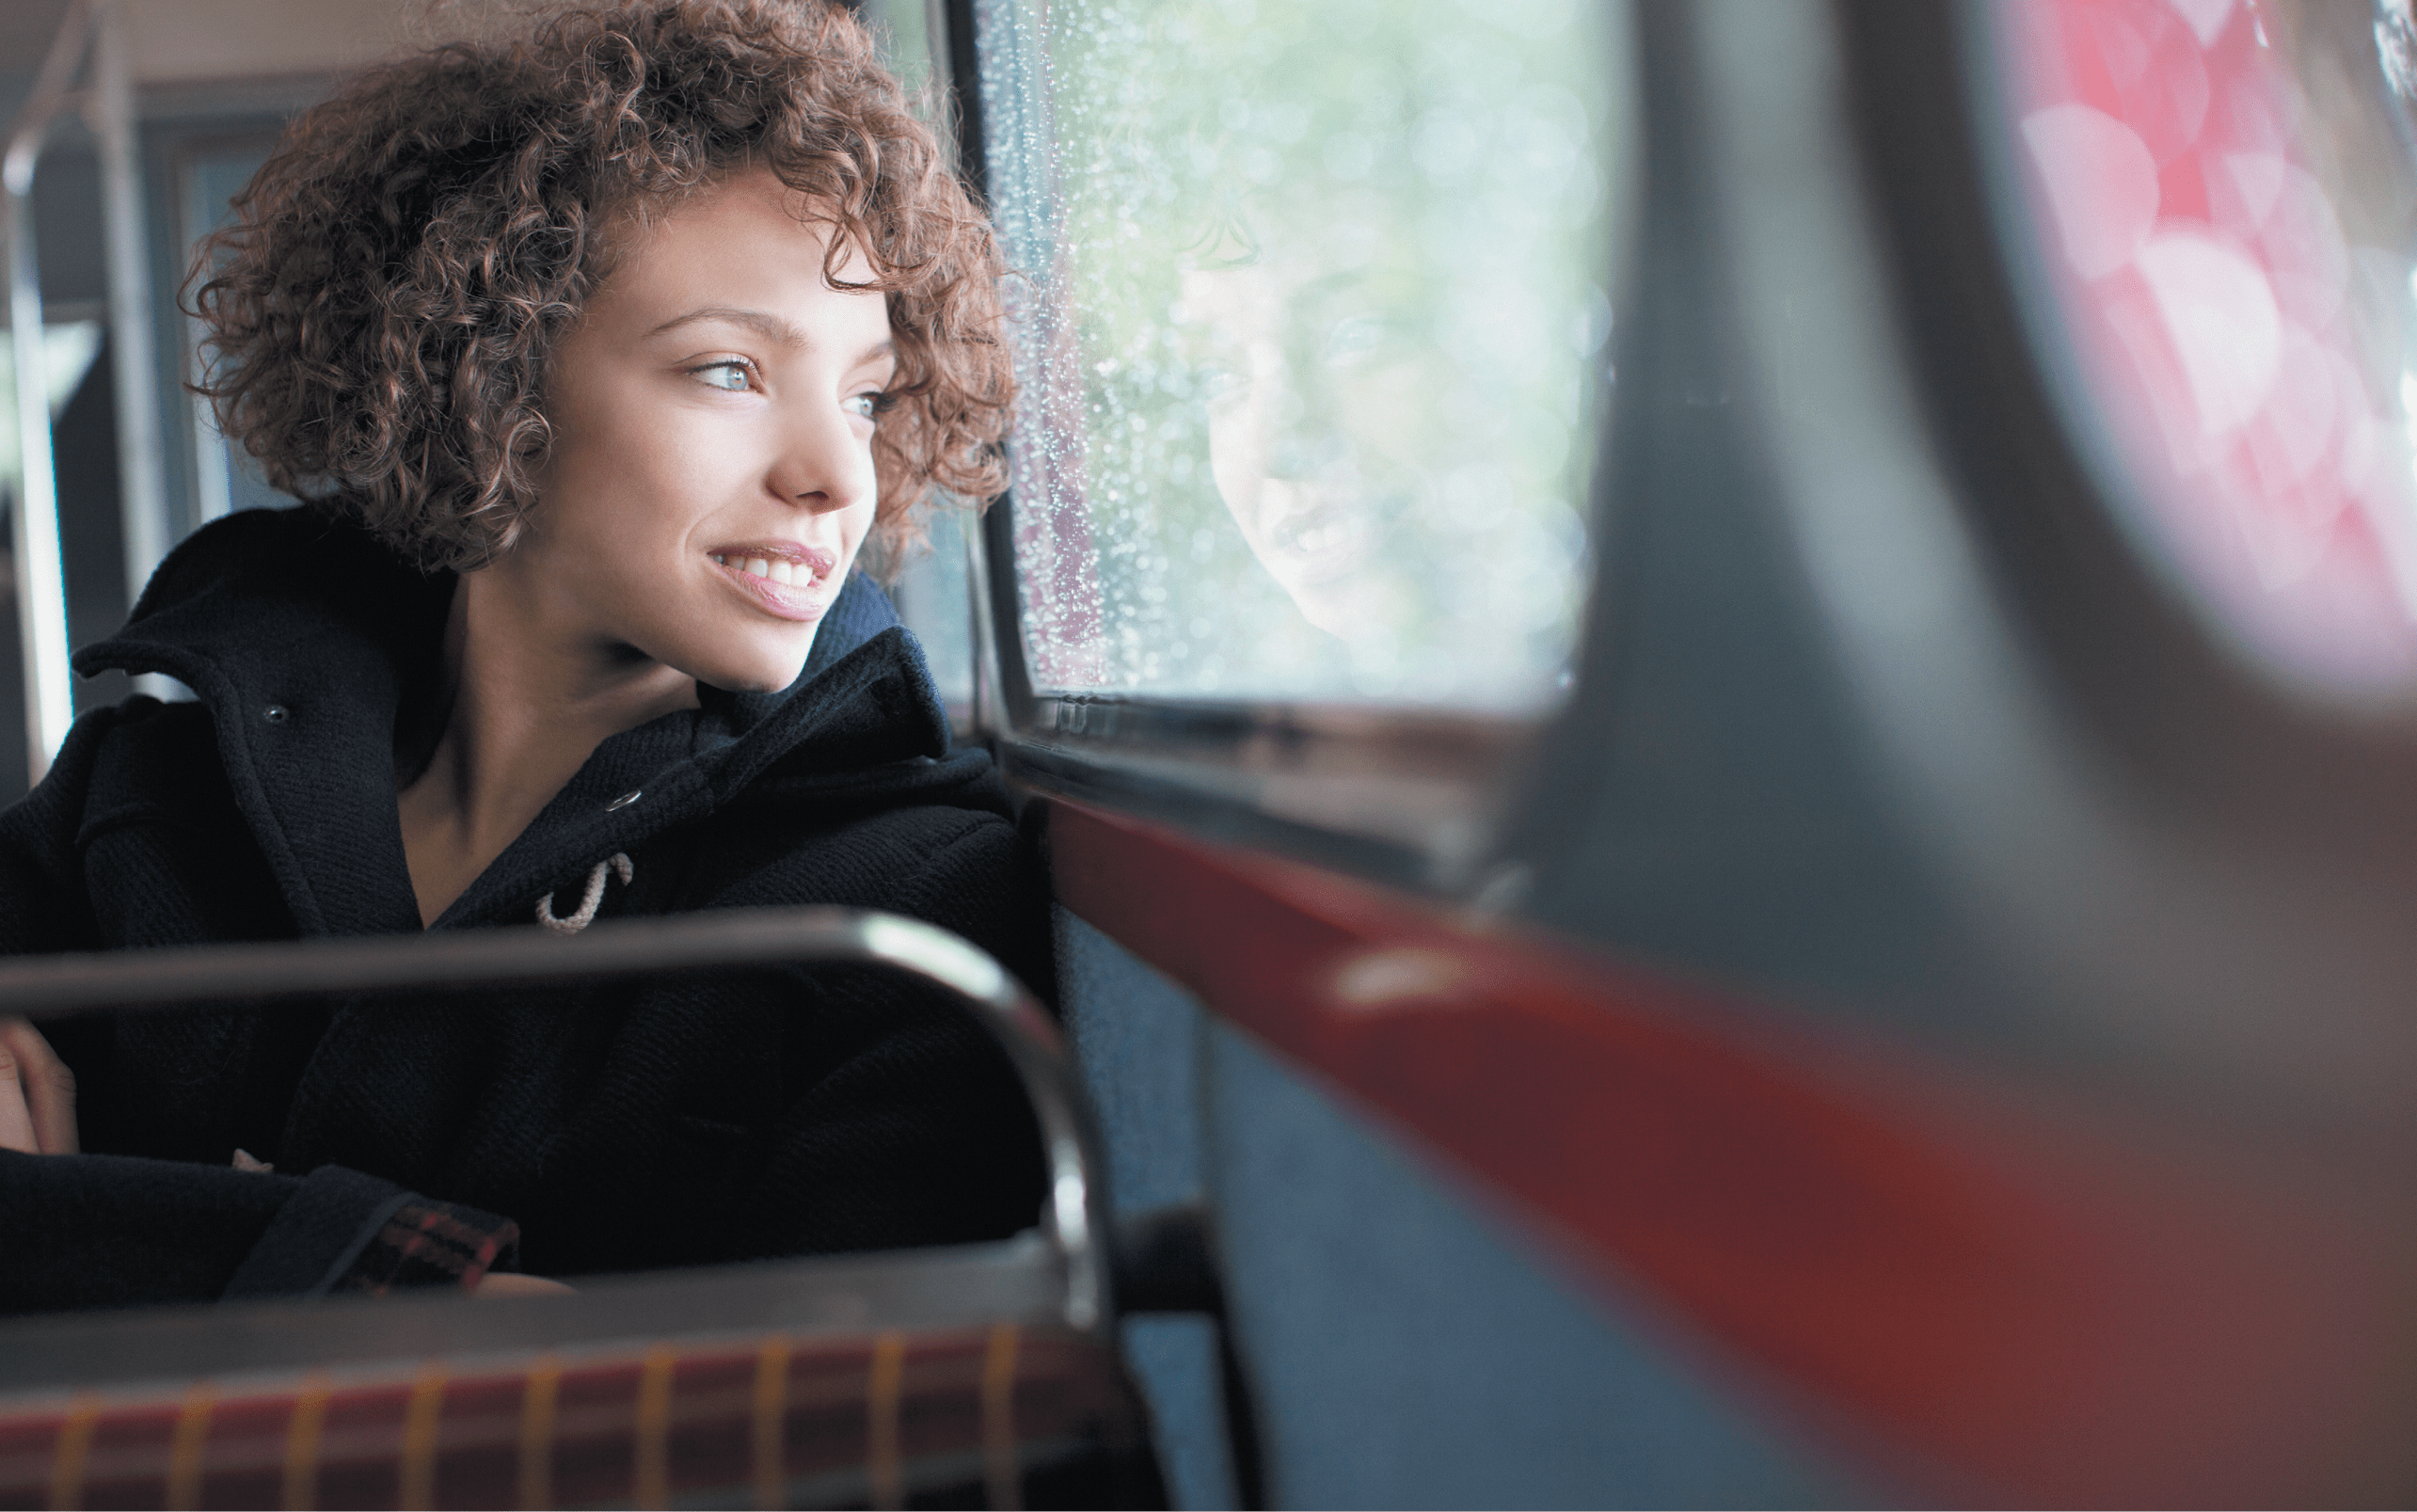 Smiling woman riding bus 137086498